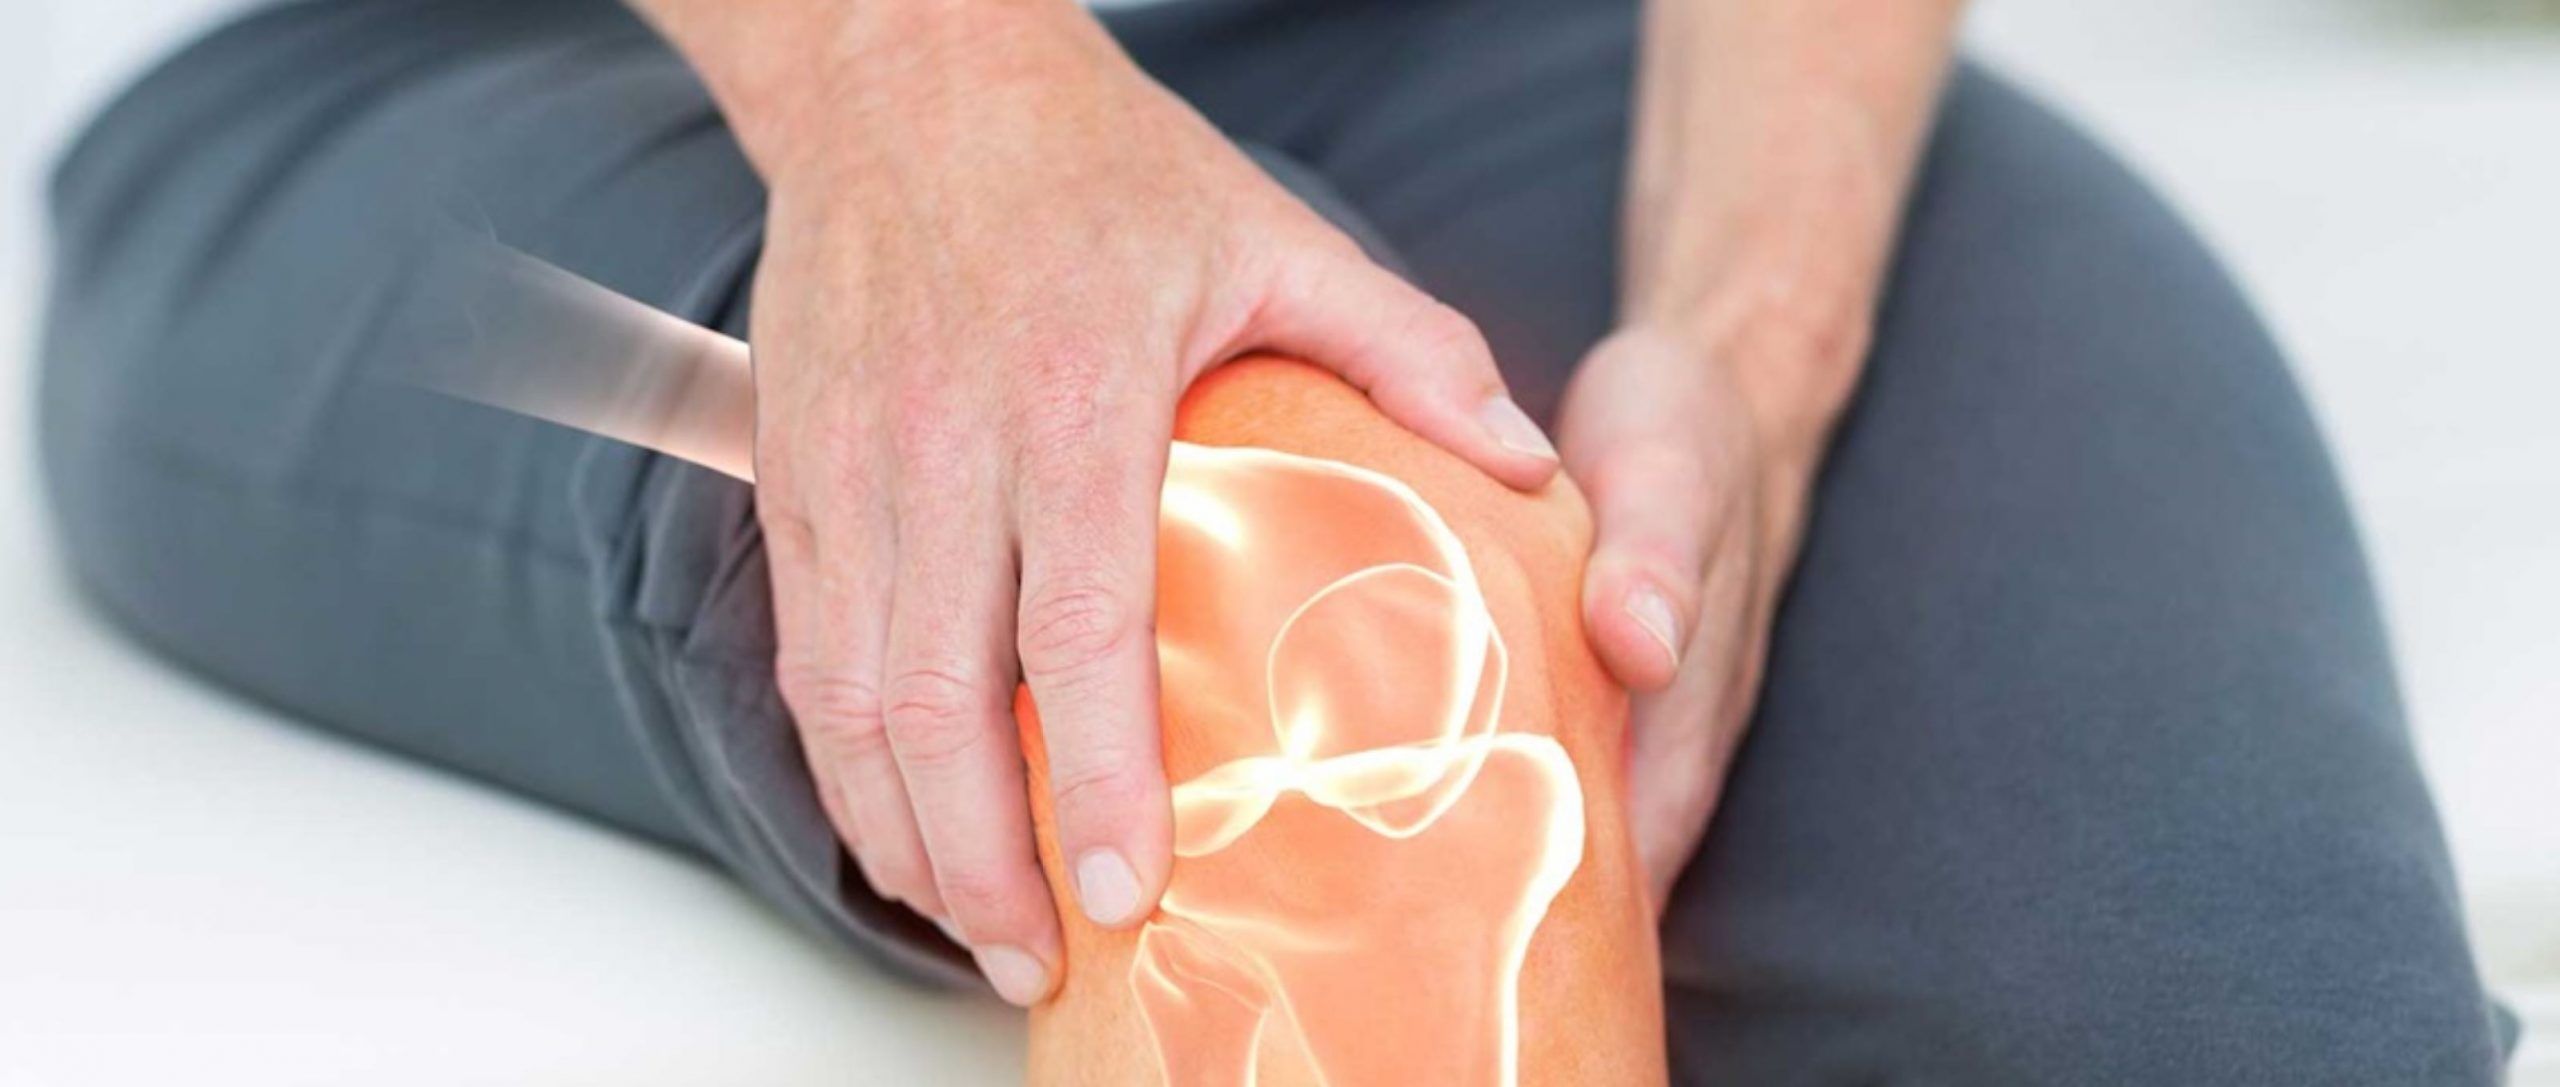 dureri la rani la genunchi impotriva inflamatiei articulare